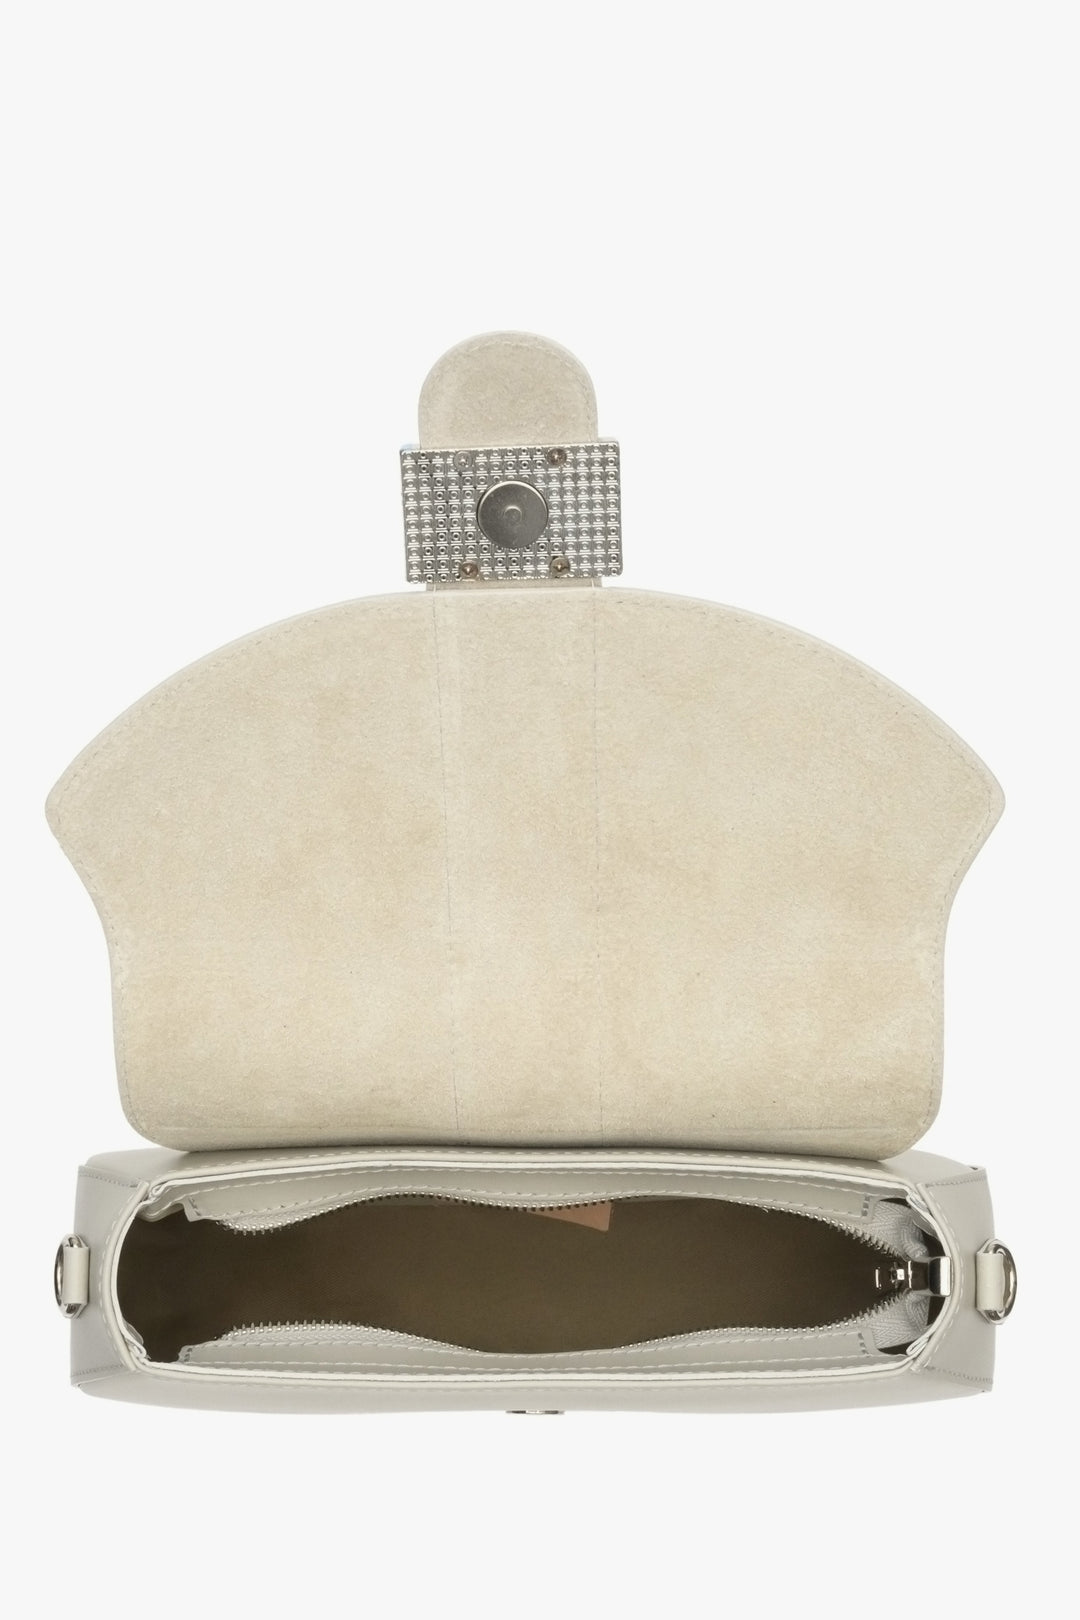 Medium-sized women's light beige leather handbag by Estro - interior view of the model.